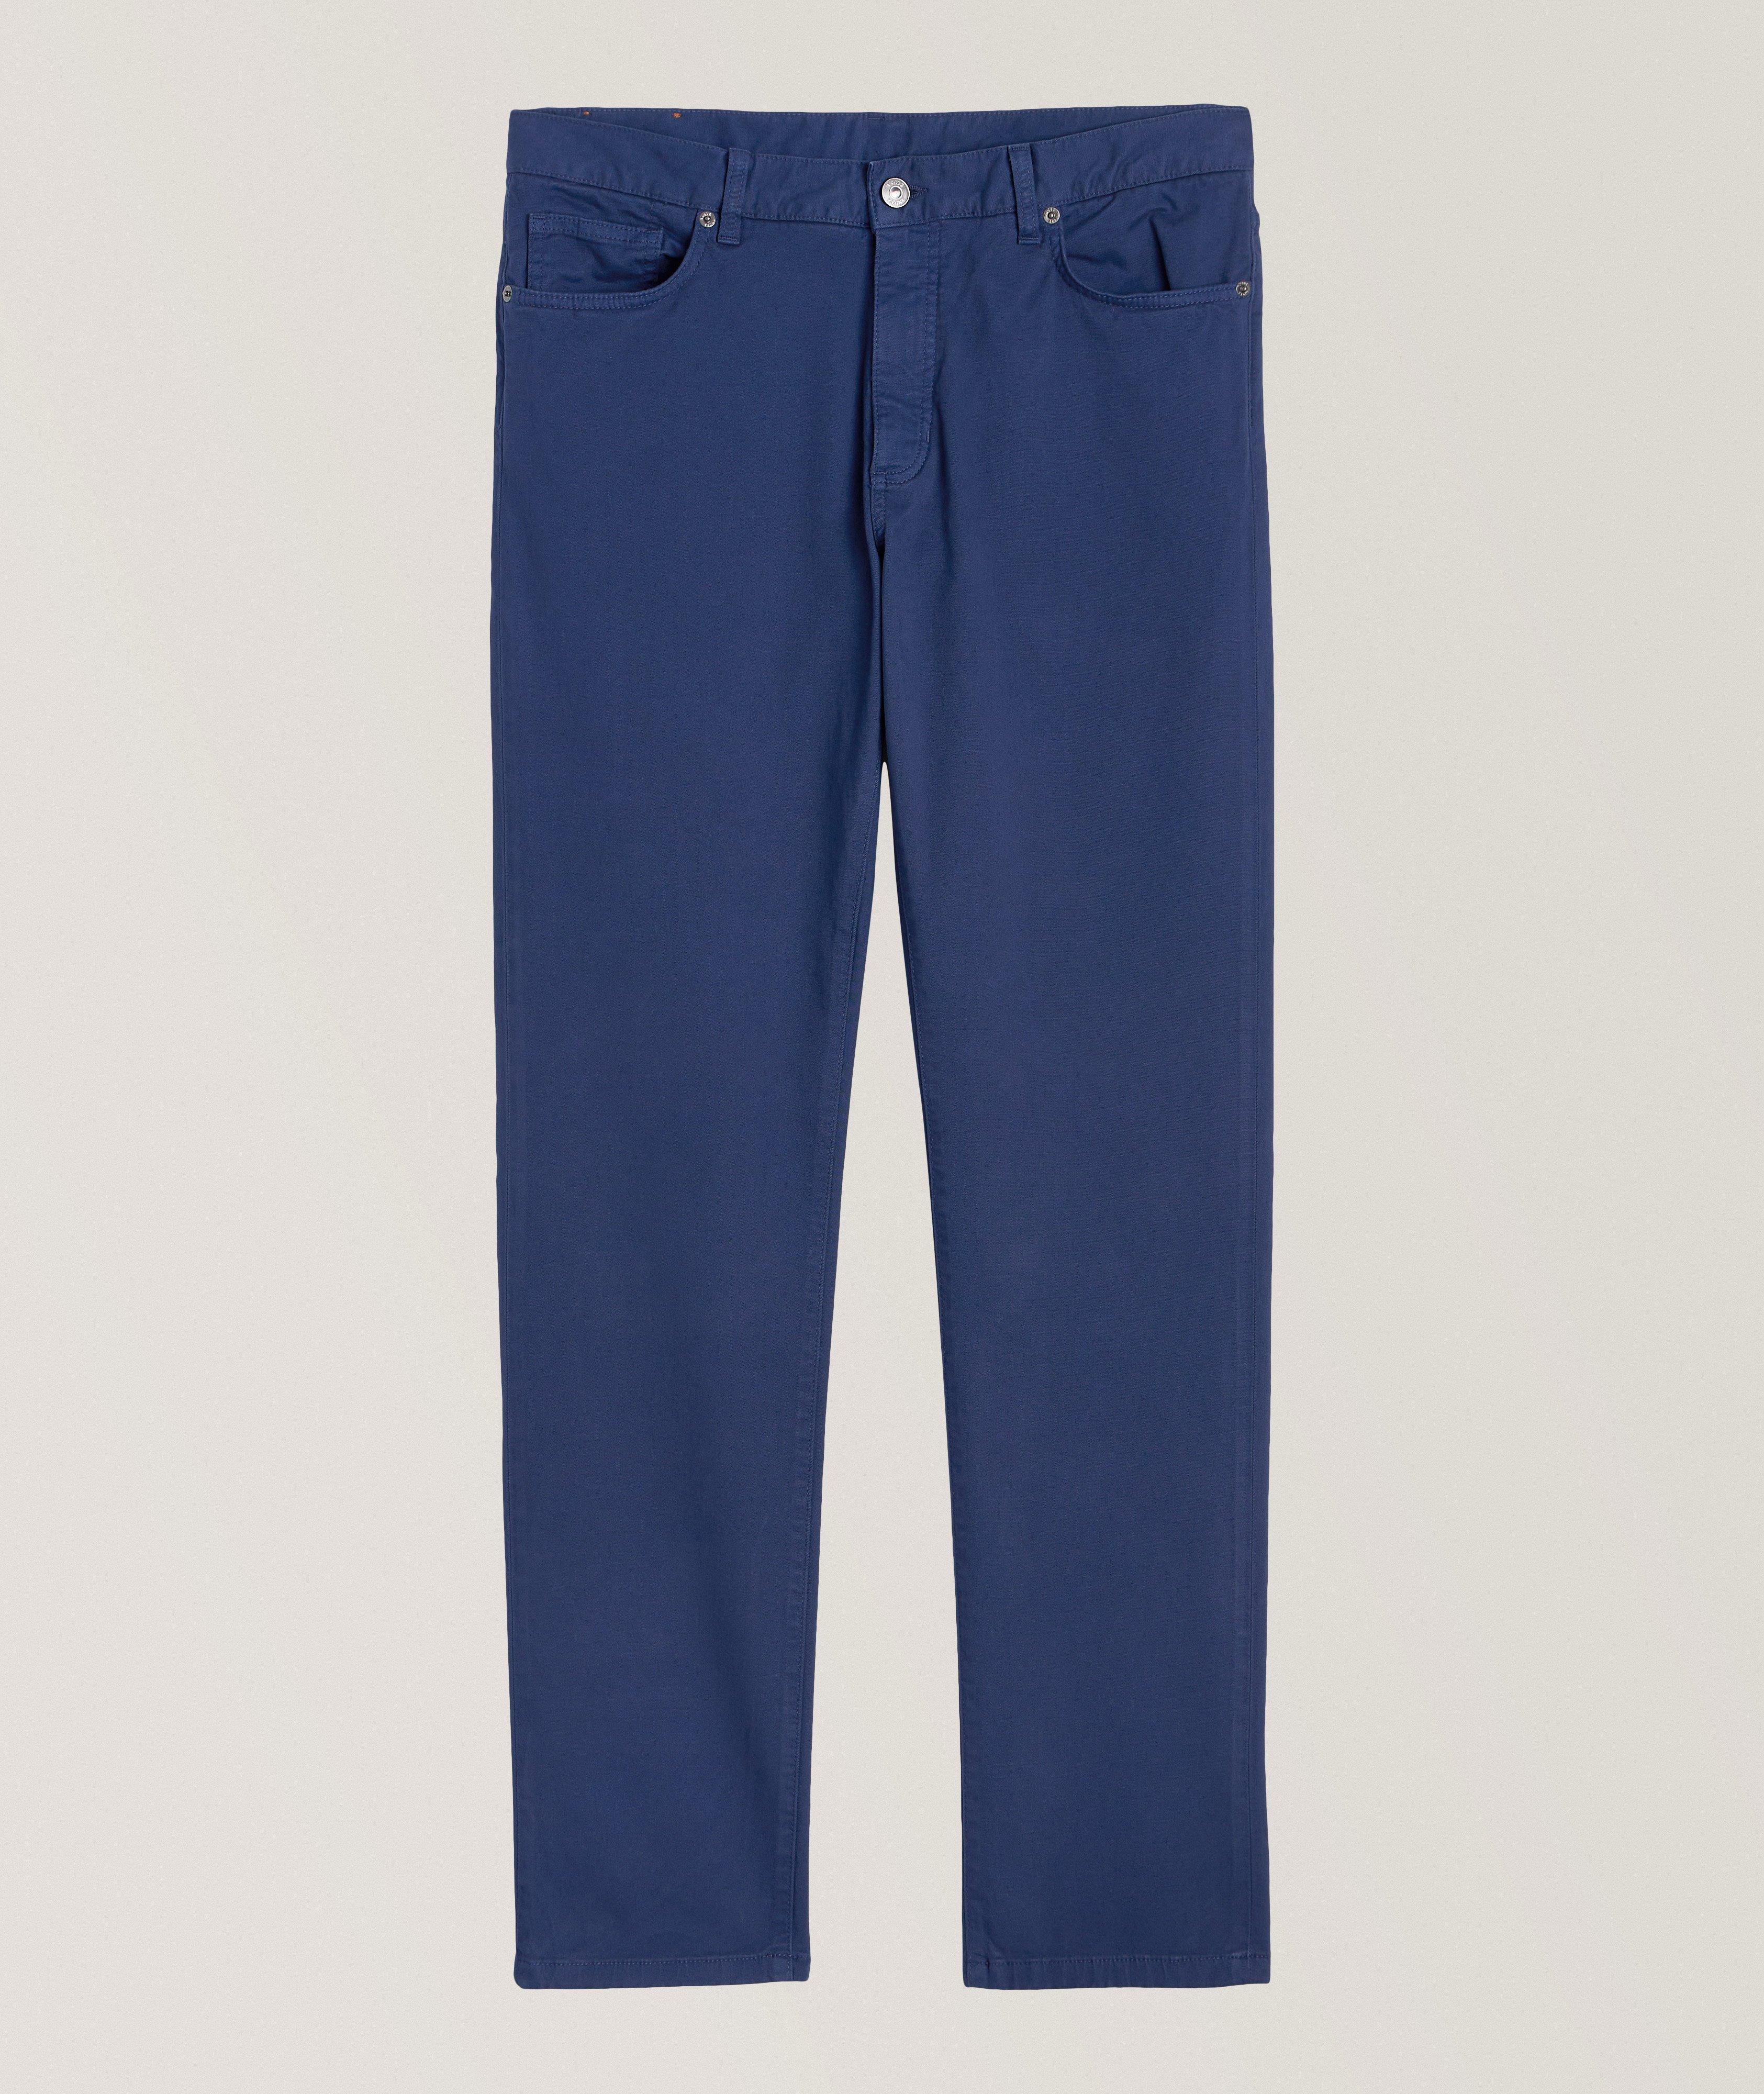 Men's Stretch Jeans Business Casual Slim Fit Denim Pants Black Blue  Trousers 1101 Black Blue 28 at  Men's Clothing store